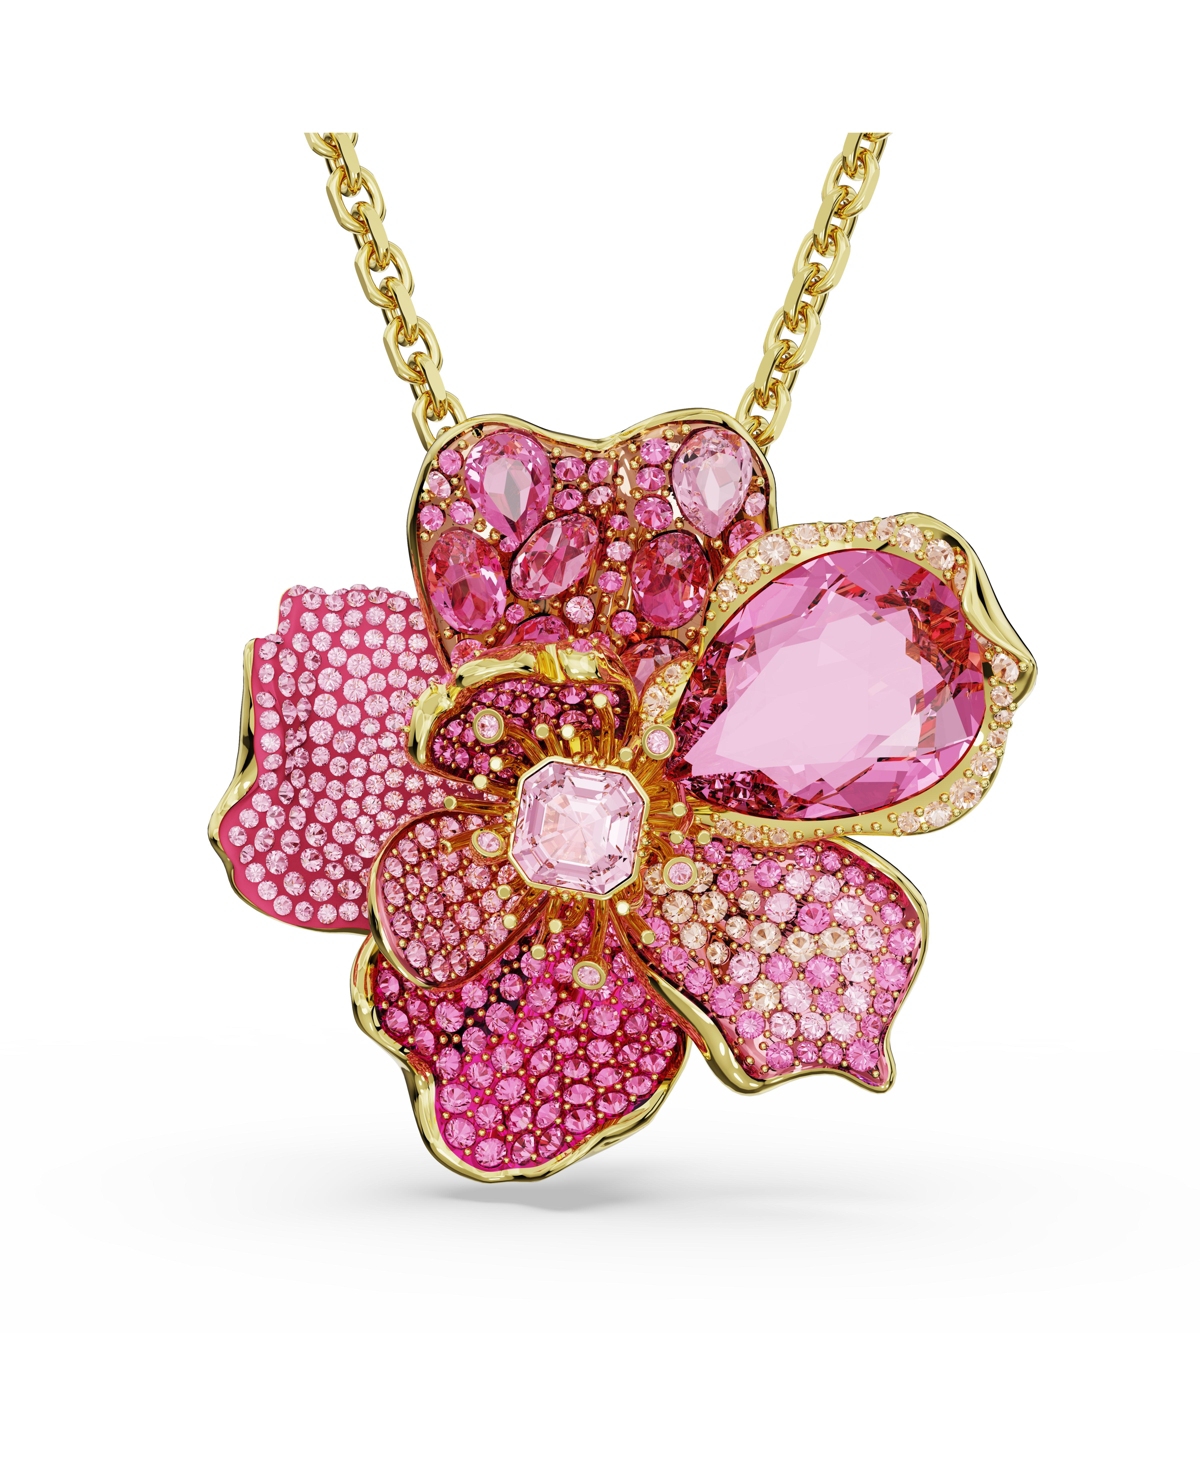 Swarovski Crystal Pave Flower Florere Pendant Necklace And Brooch In Pink